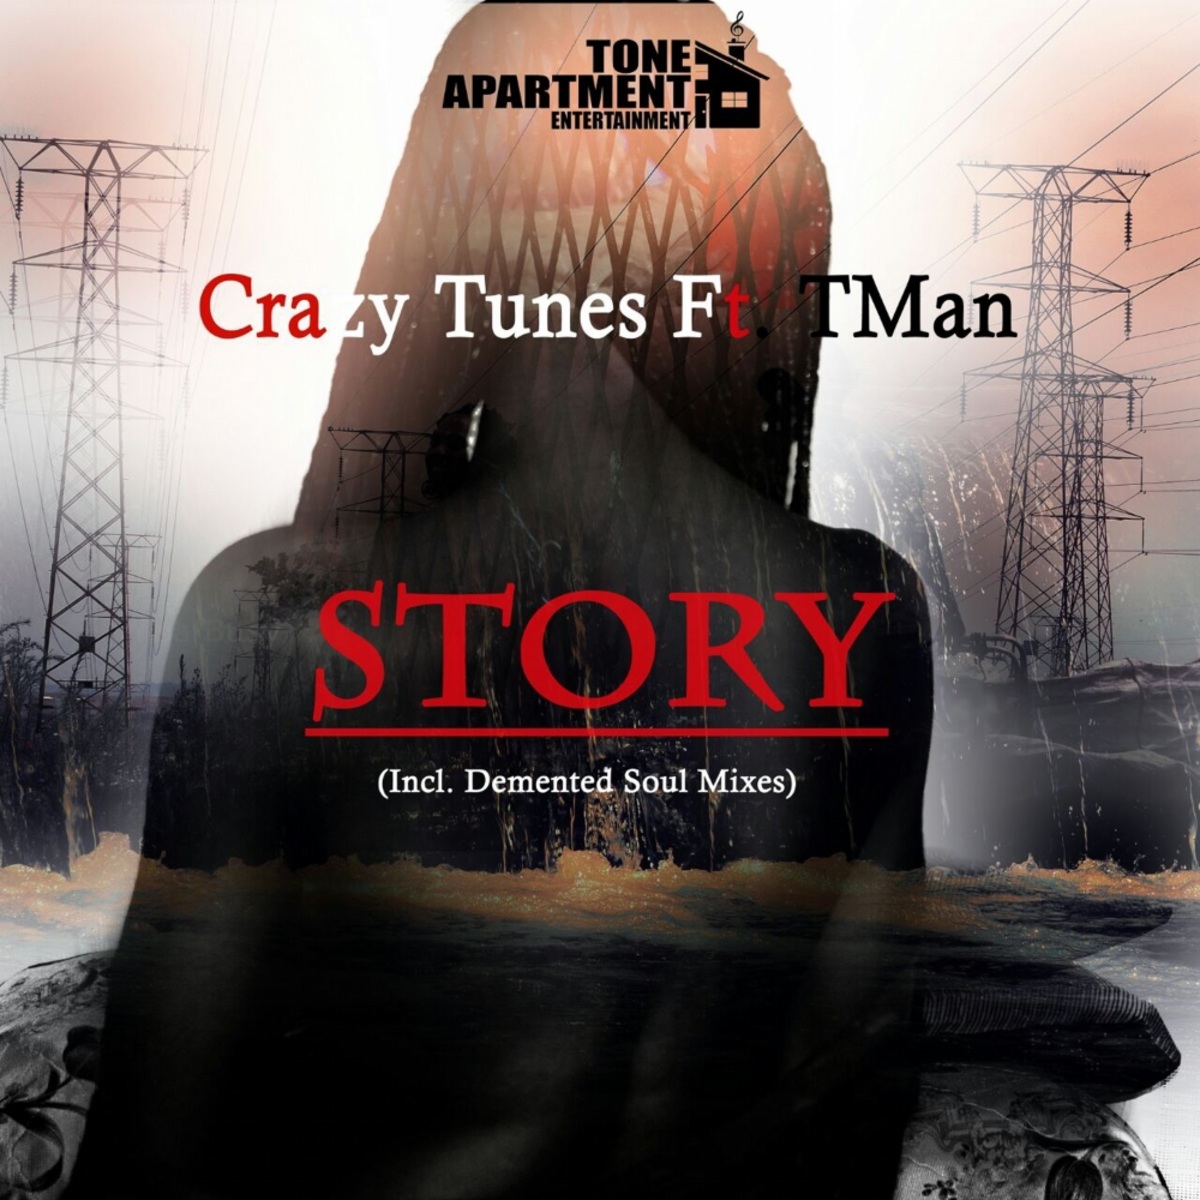 Crazy Tunes ft TMAN - Story / Tone Apartment Entertainment